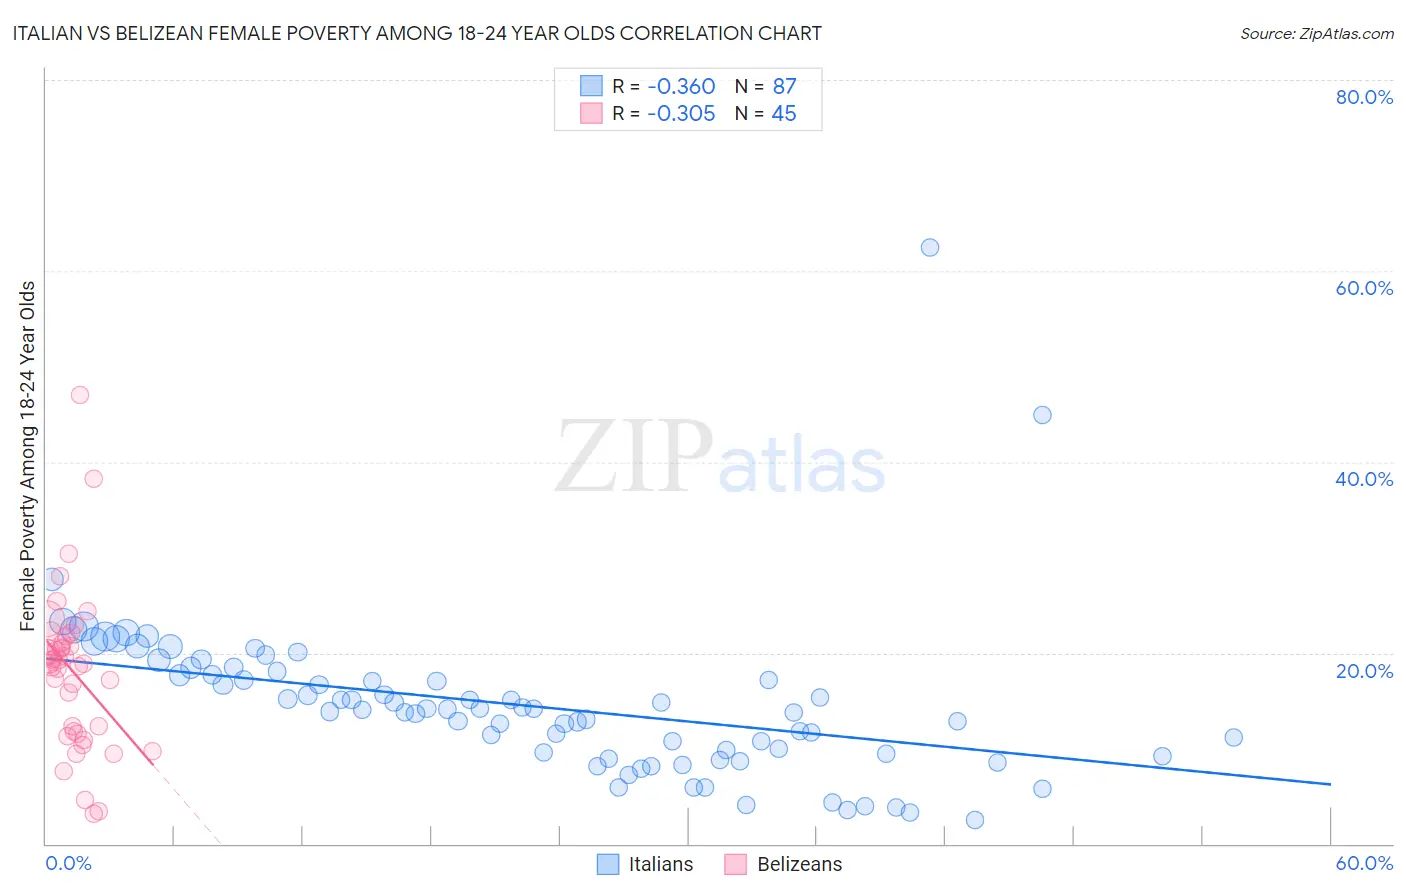 Italian vs Belizean Female Poverty Among 18-24 Year Olds